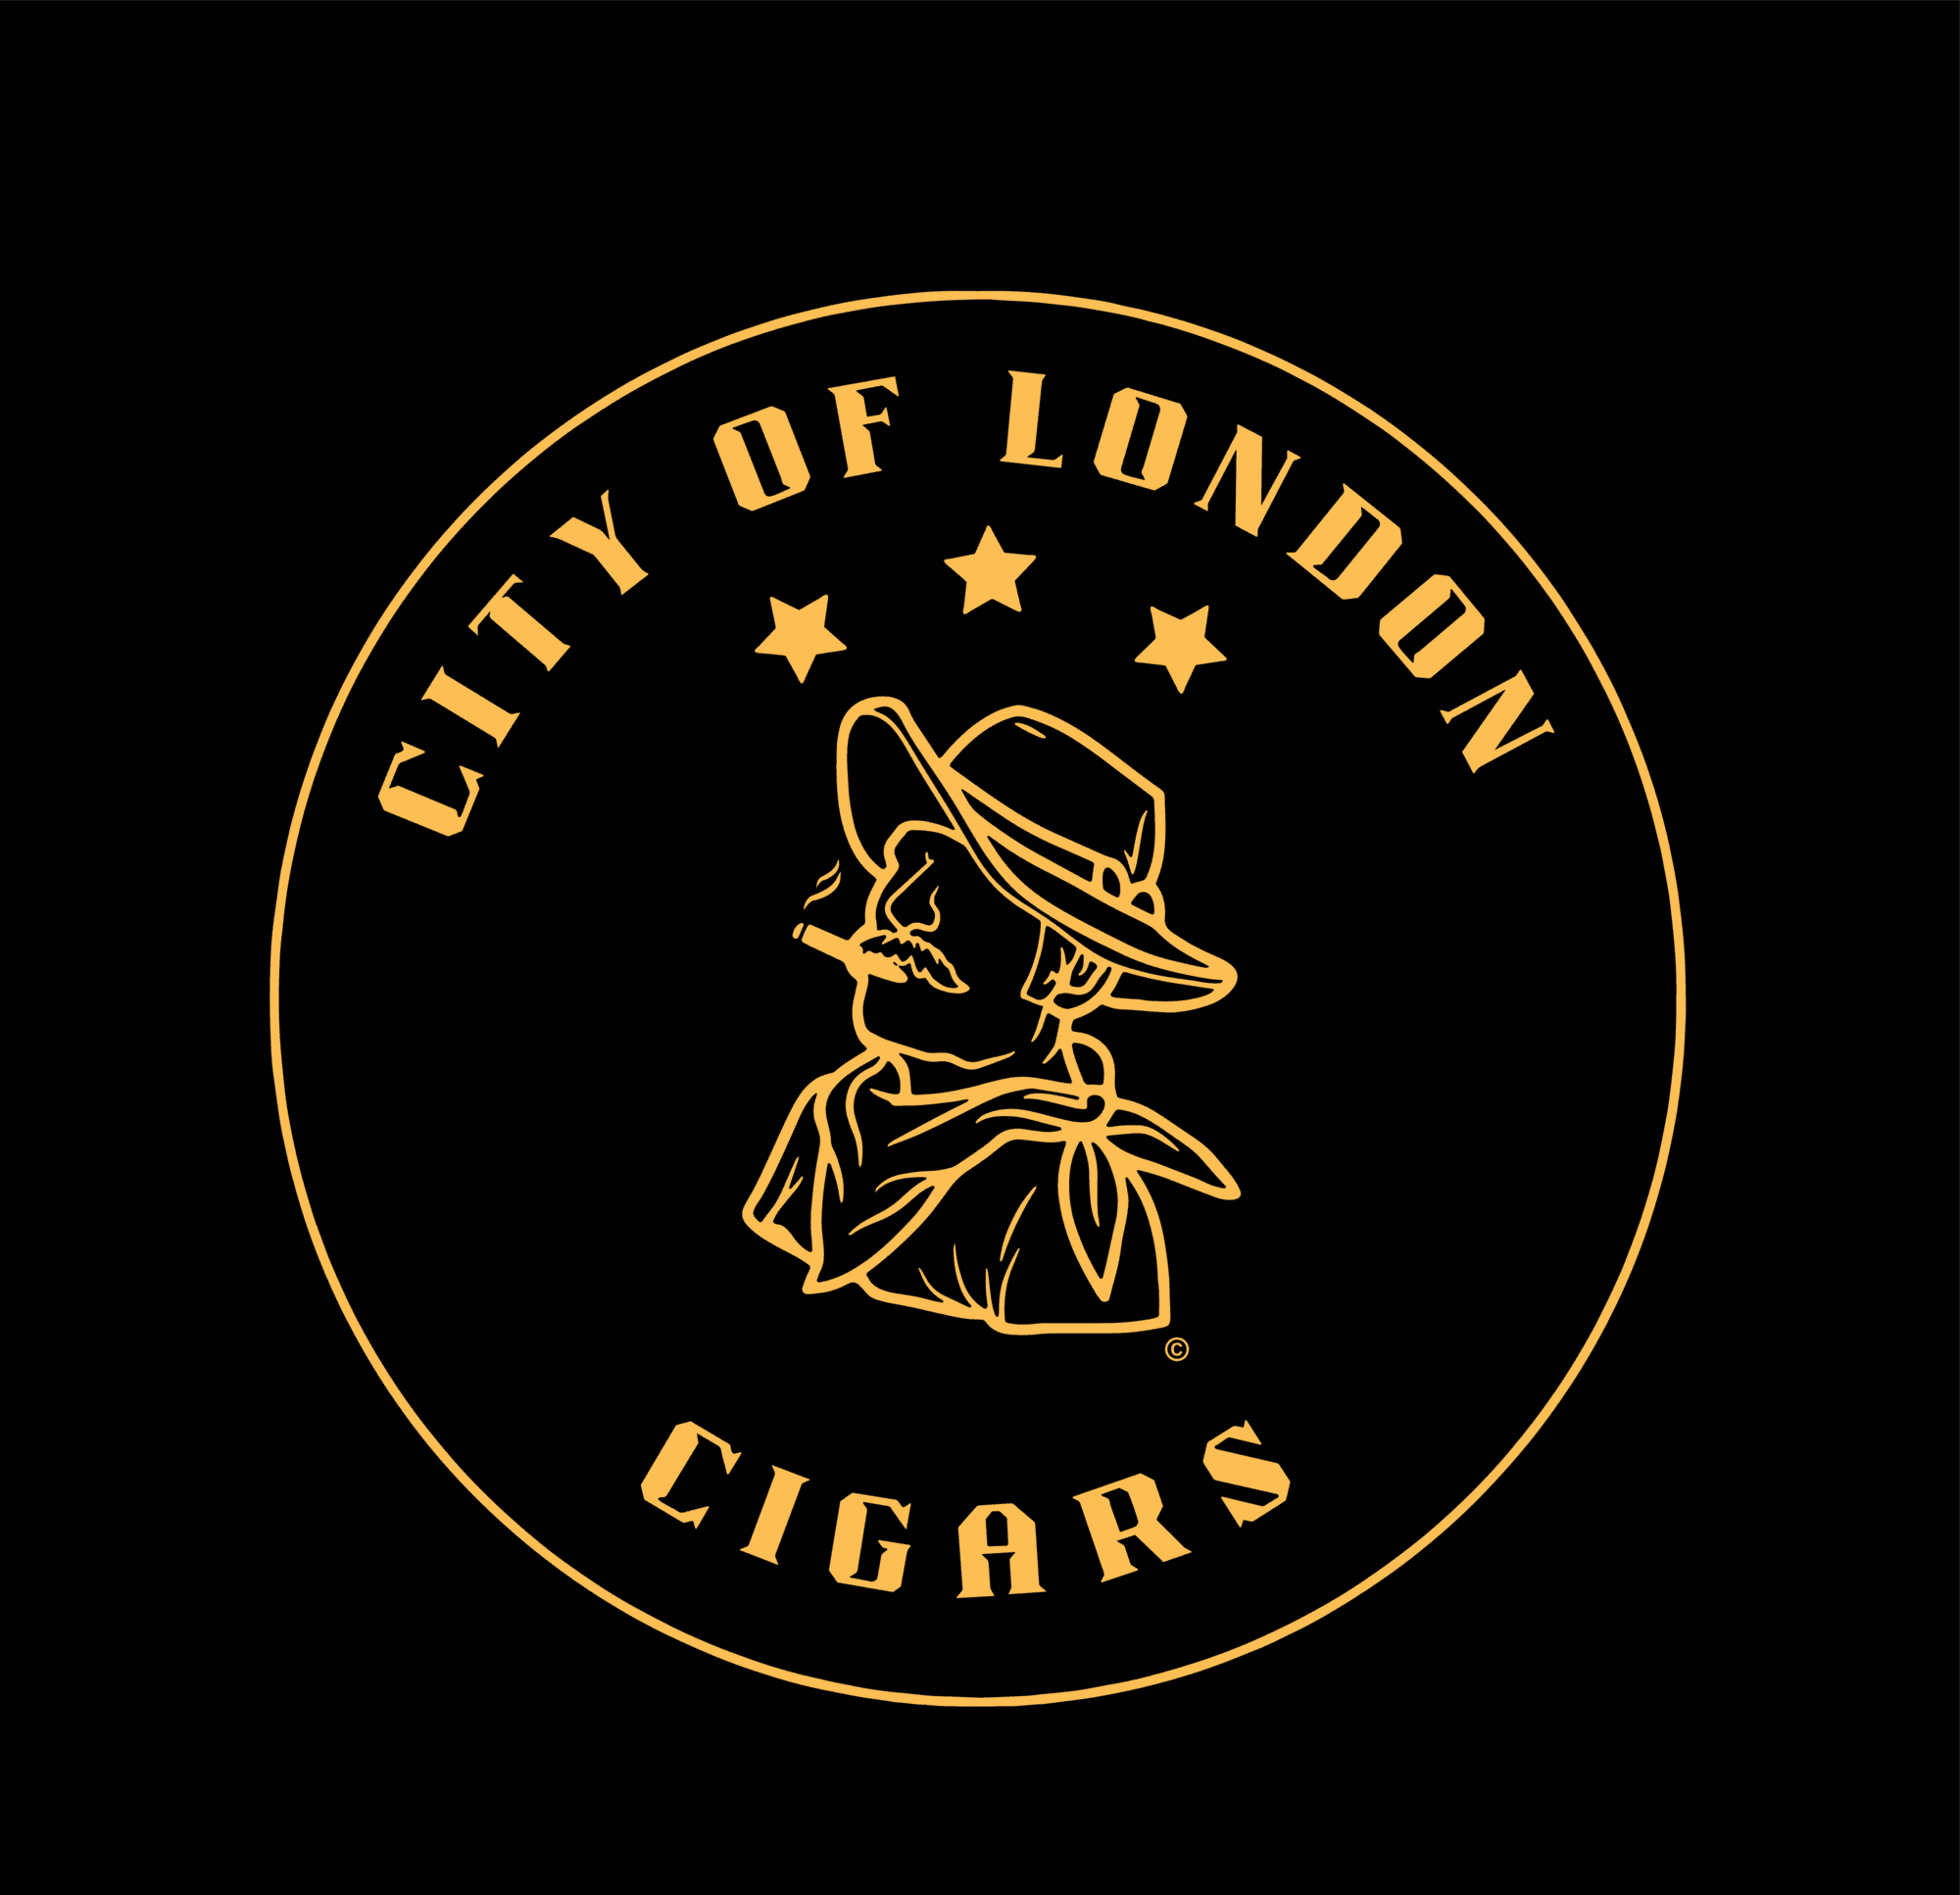 City Of London Cigars